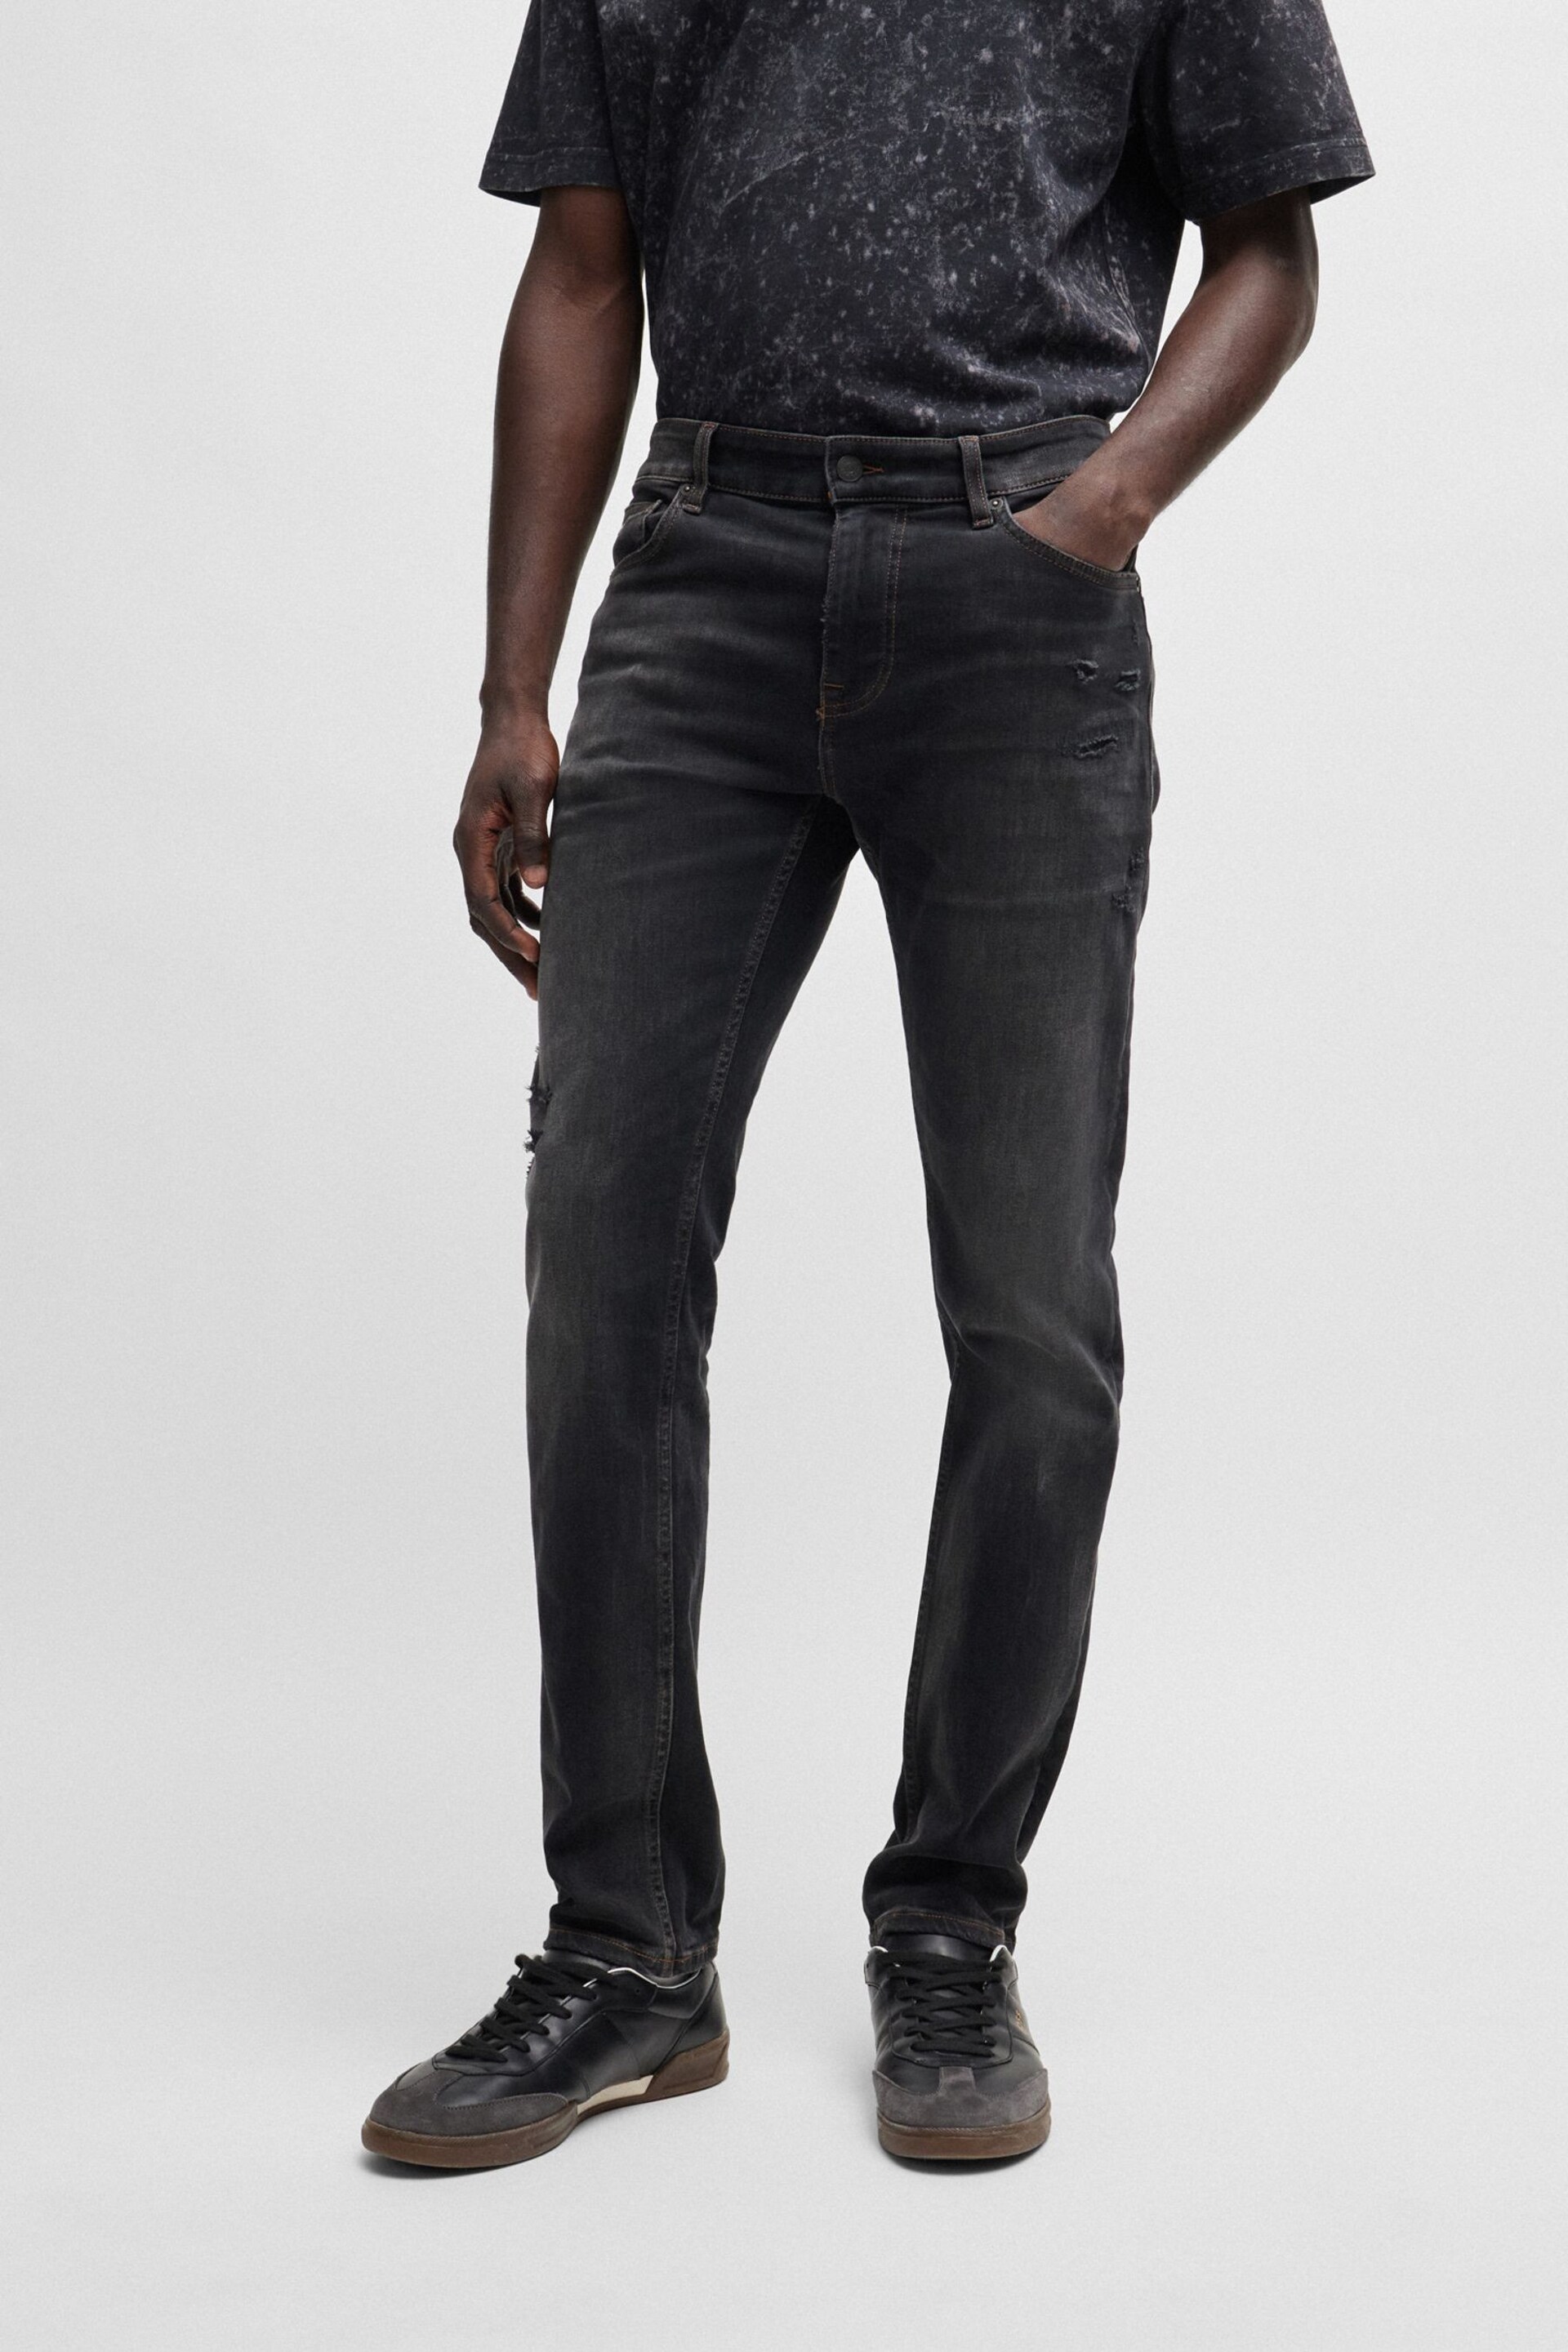 BOSS Grey Light Slim Fit Soft-Motion Denim Jeans - Image 1 of 5